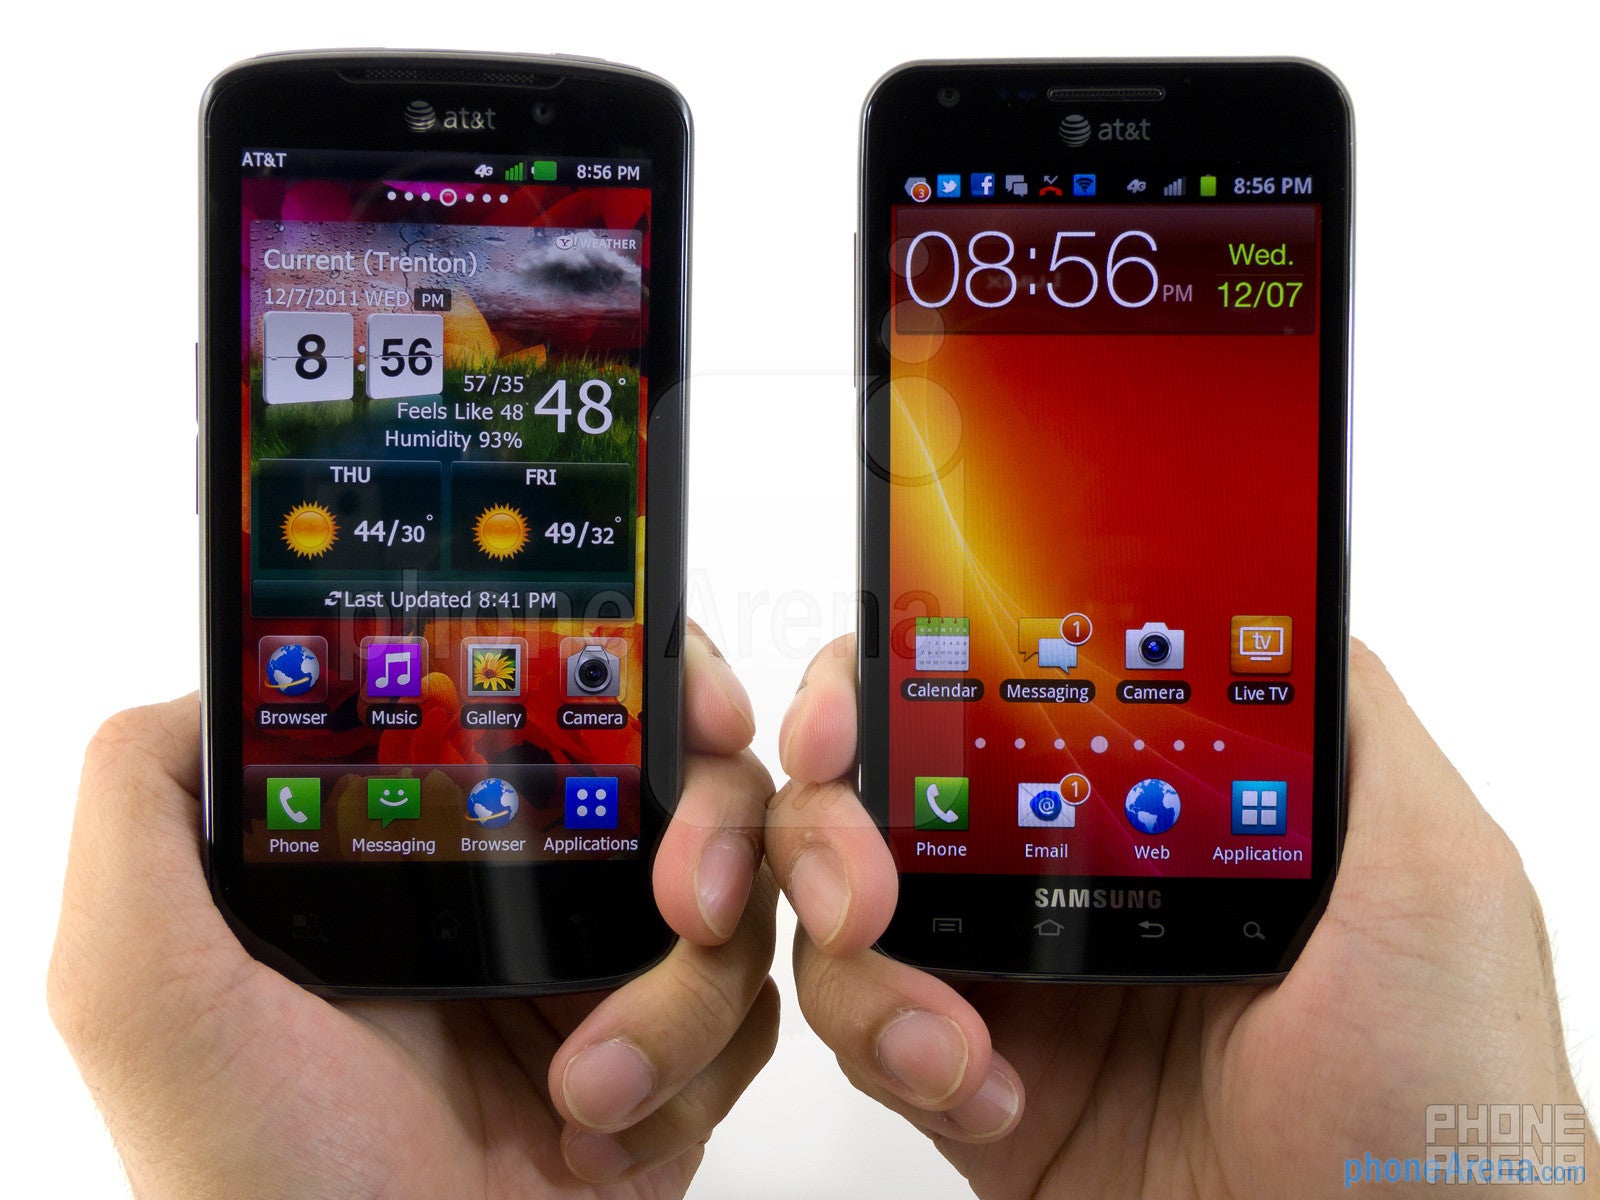 LG Nitro HD vs Samsung Galaxy S II Skyrocket